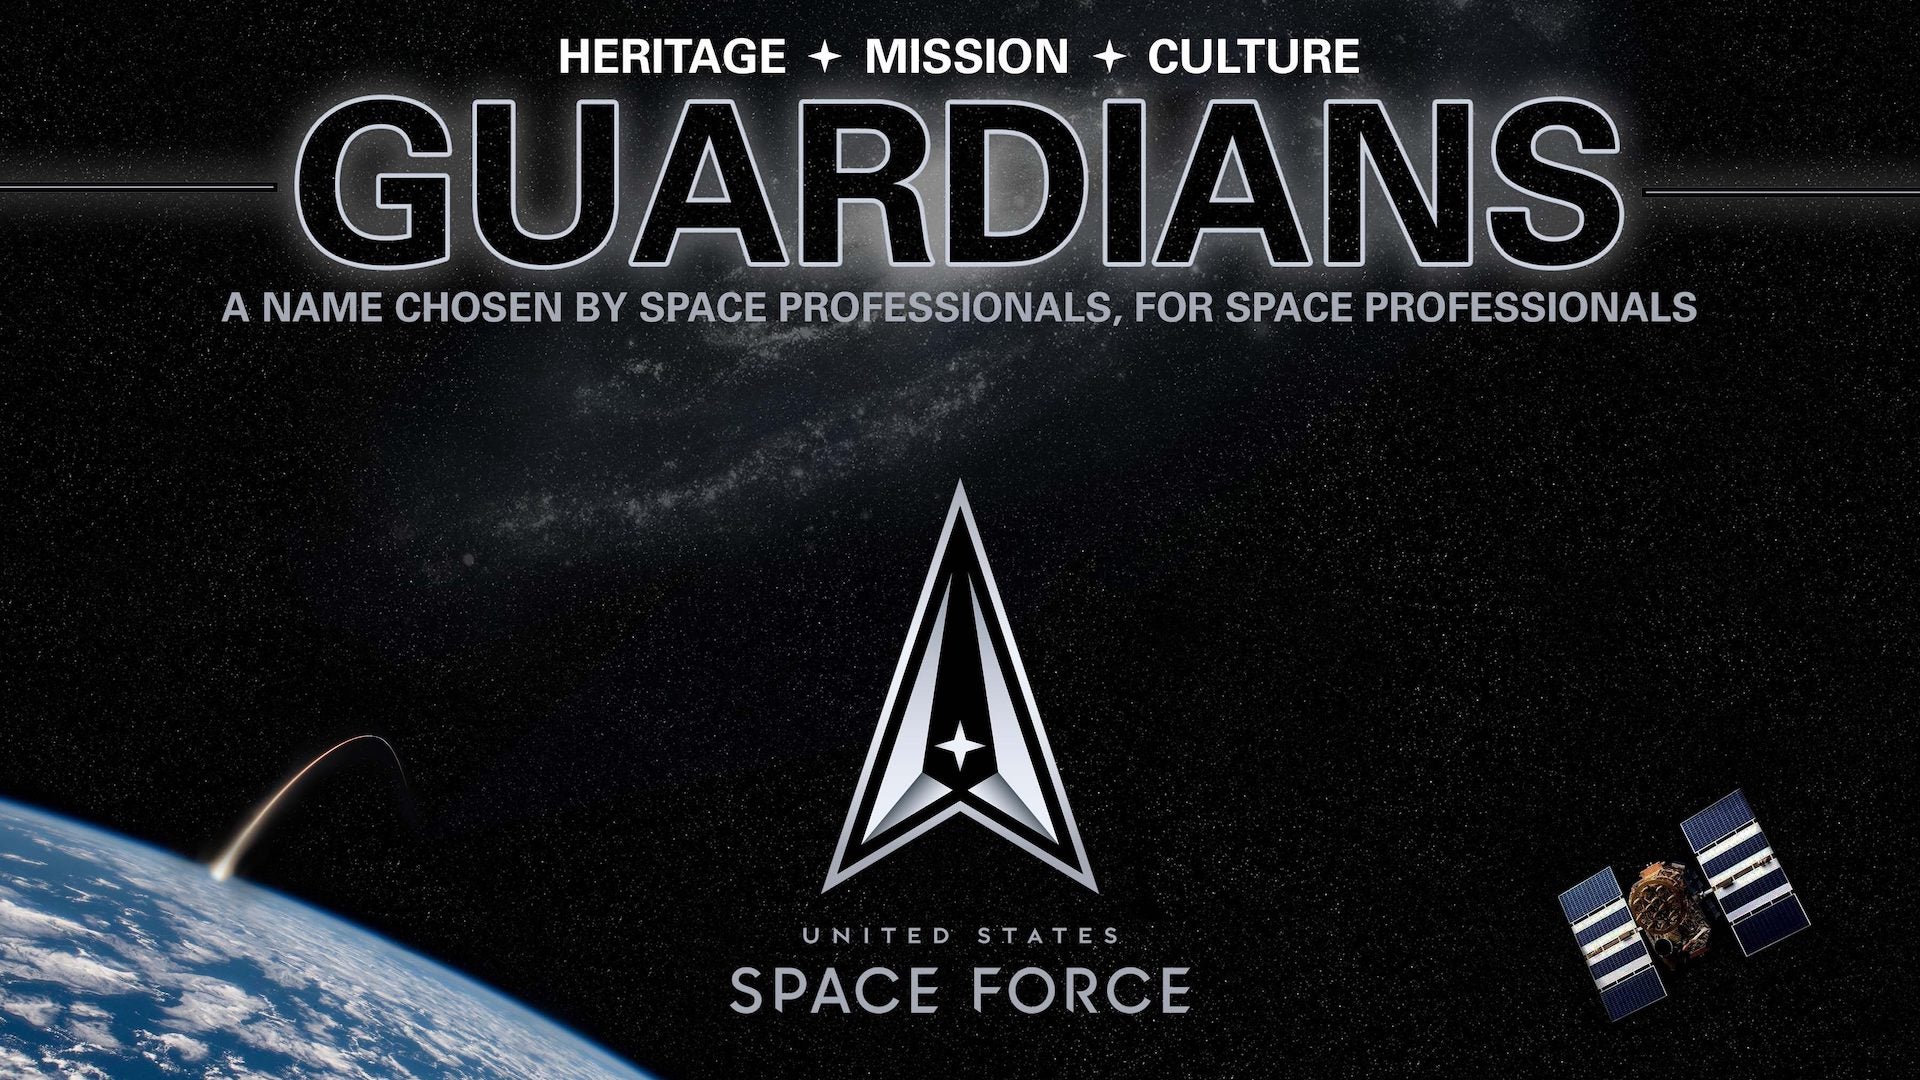 https://taskandpurpose.com/uploads/2020/12/18/space-force-guardians.jpeg